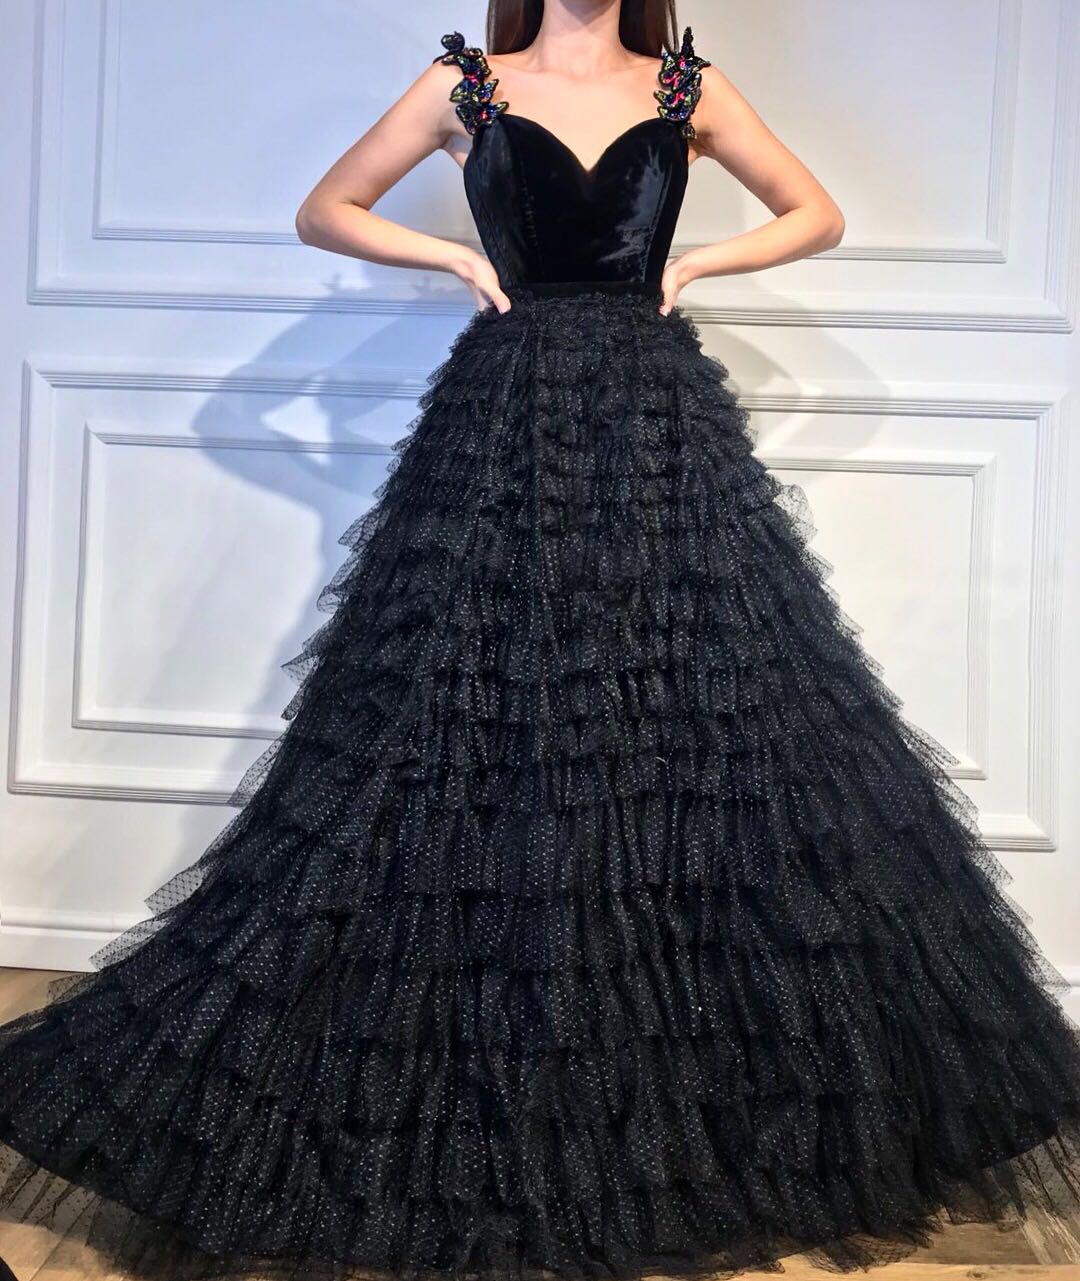 Oscar de la Renta Fall 2018 RTW | Fashion, Fashion show, Gowns dresses